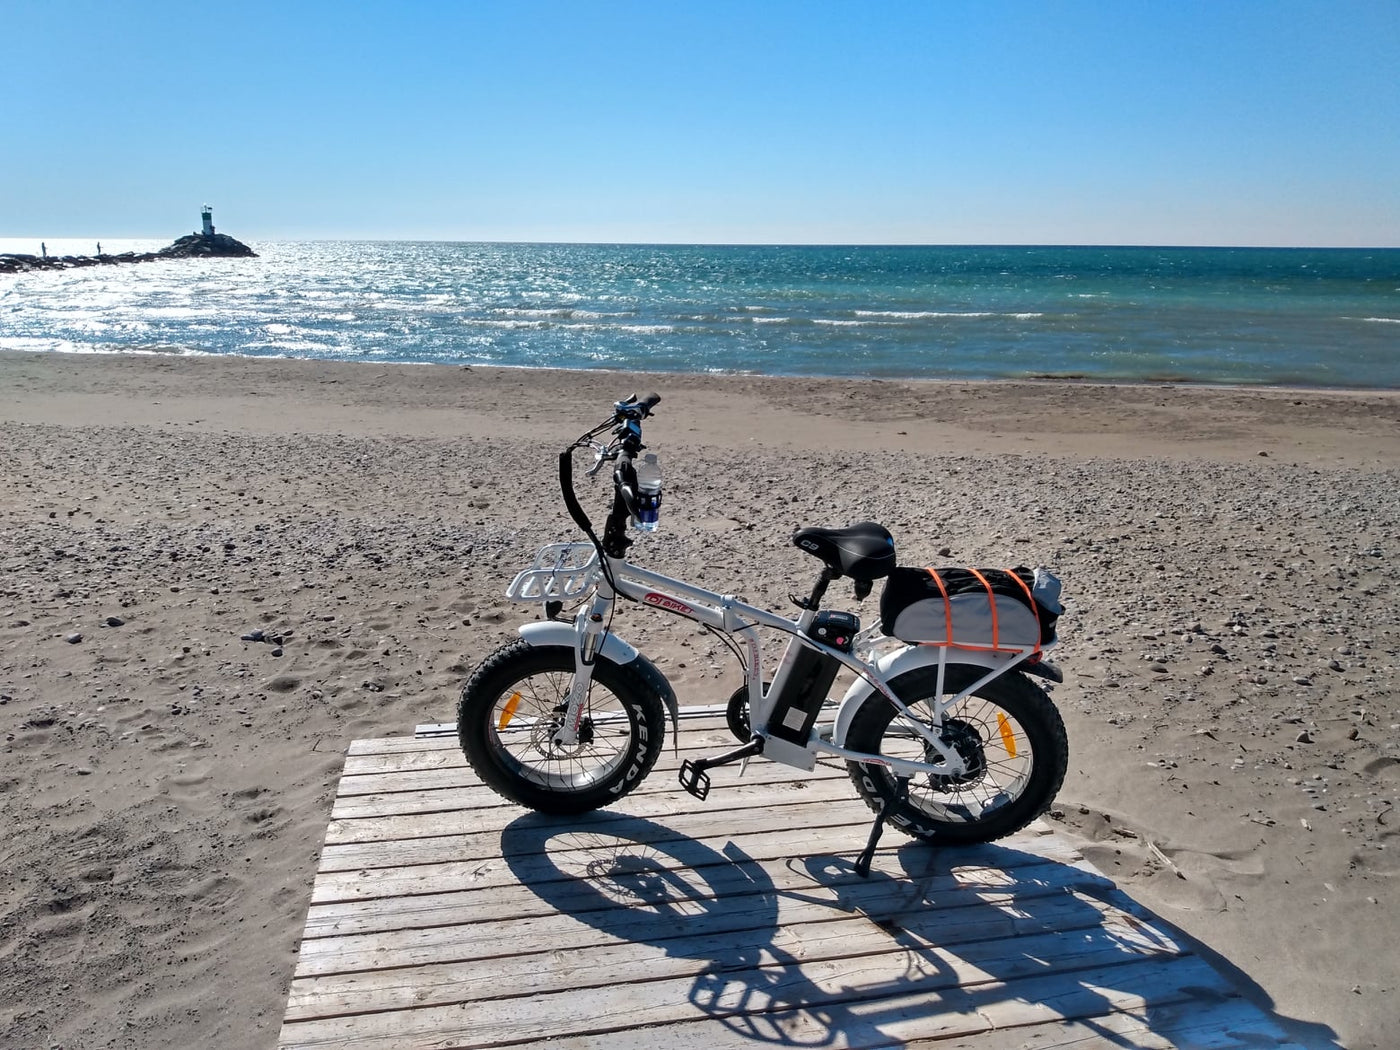 A DJ Folding Bike fat tire e-bike equipped with trunk bag on a sandy beach